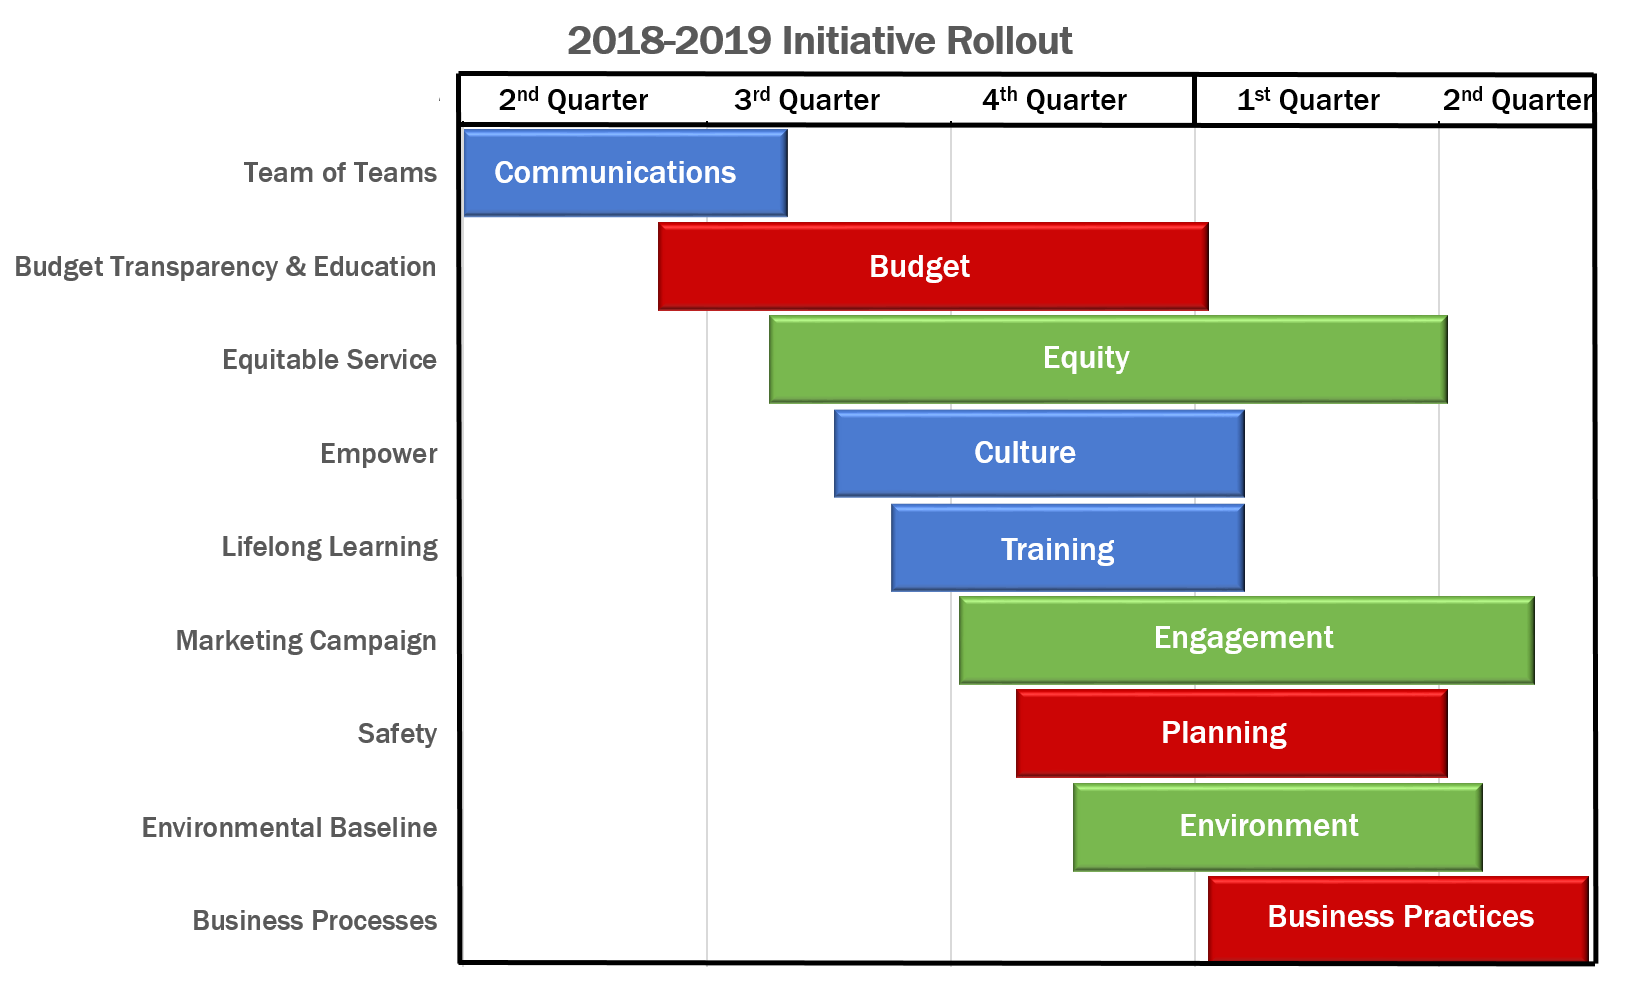 Gantt chart of 2018-2019 rollout schedule for ES Strategic Plan initiatives